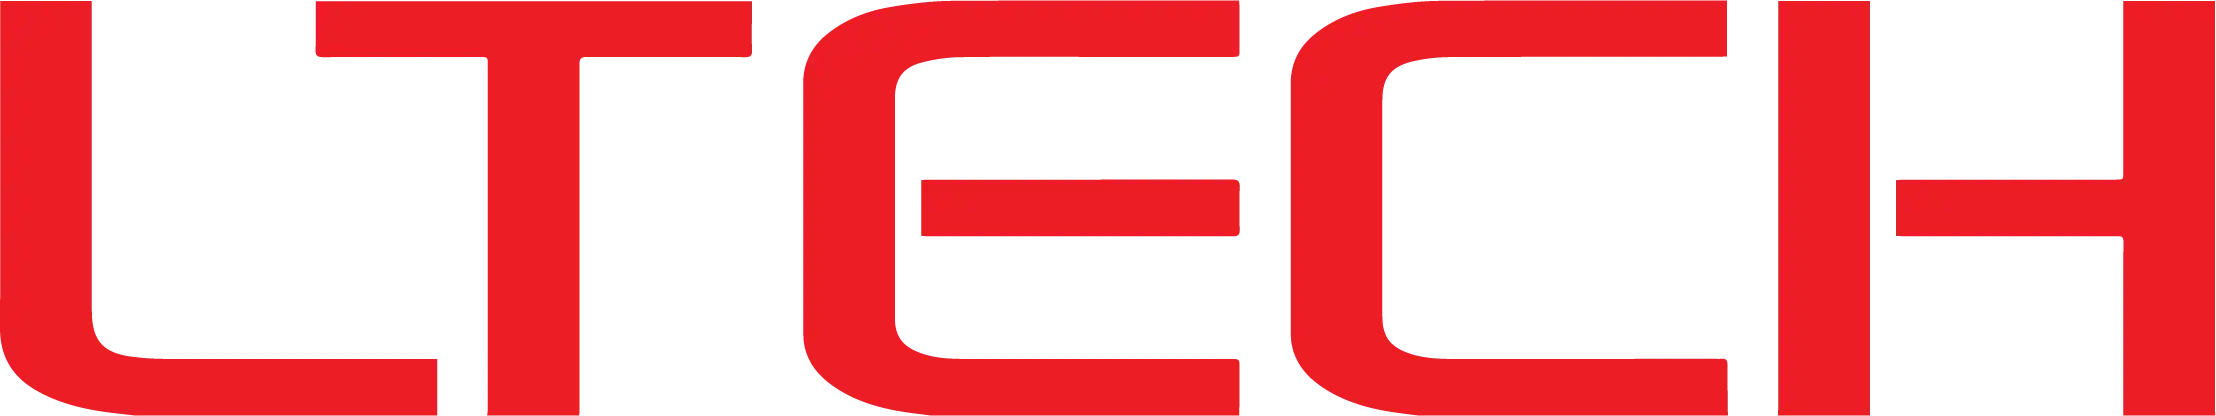 Logo LTECH RGB